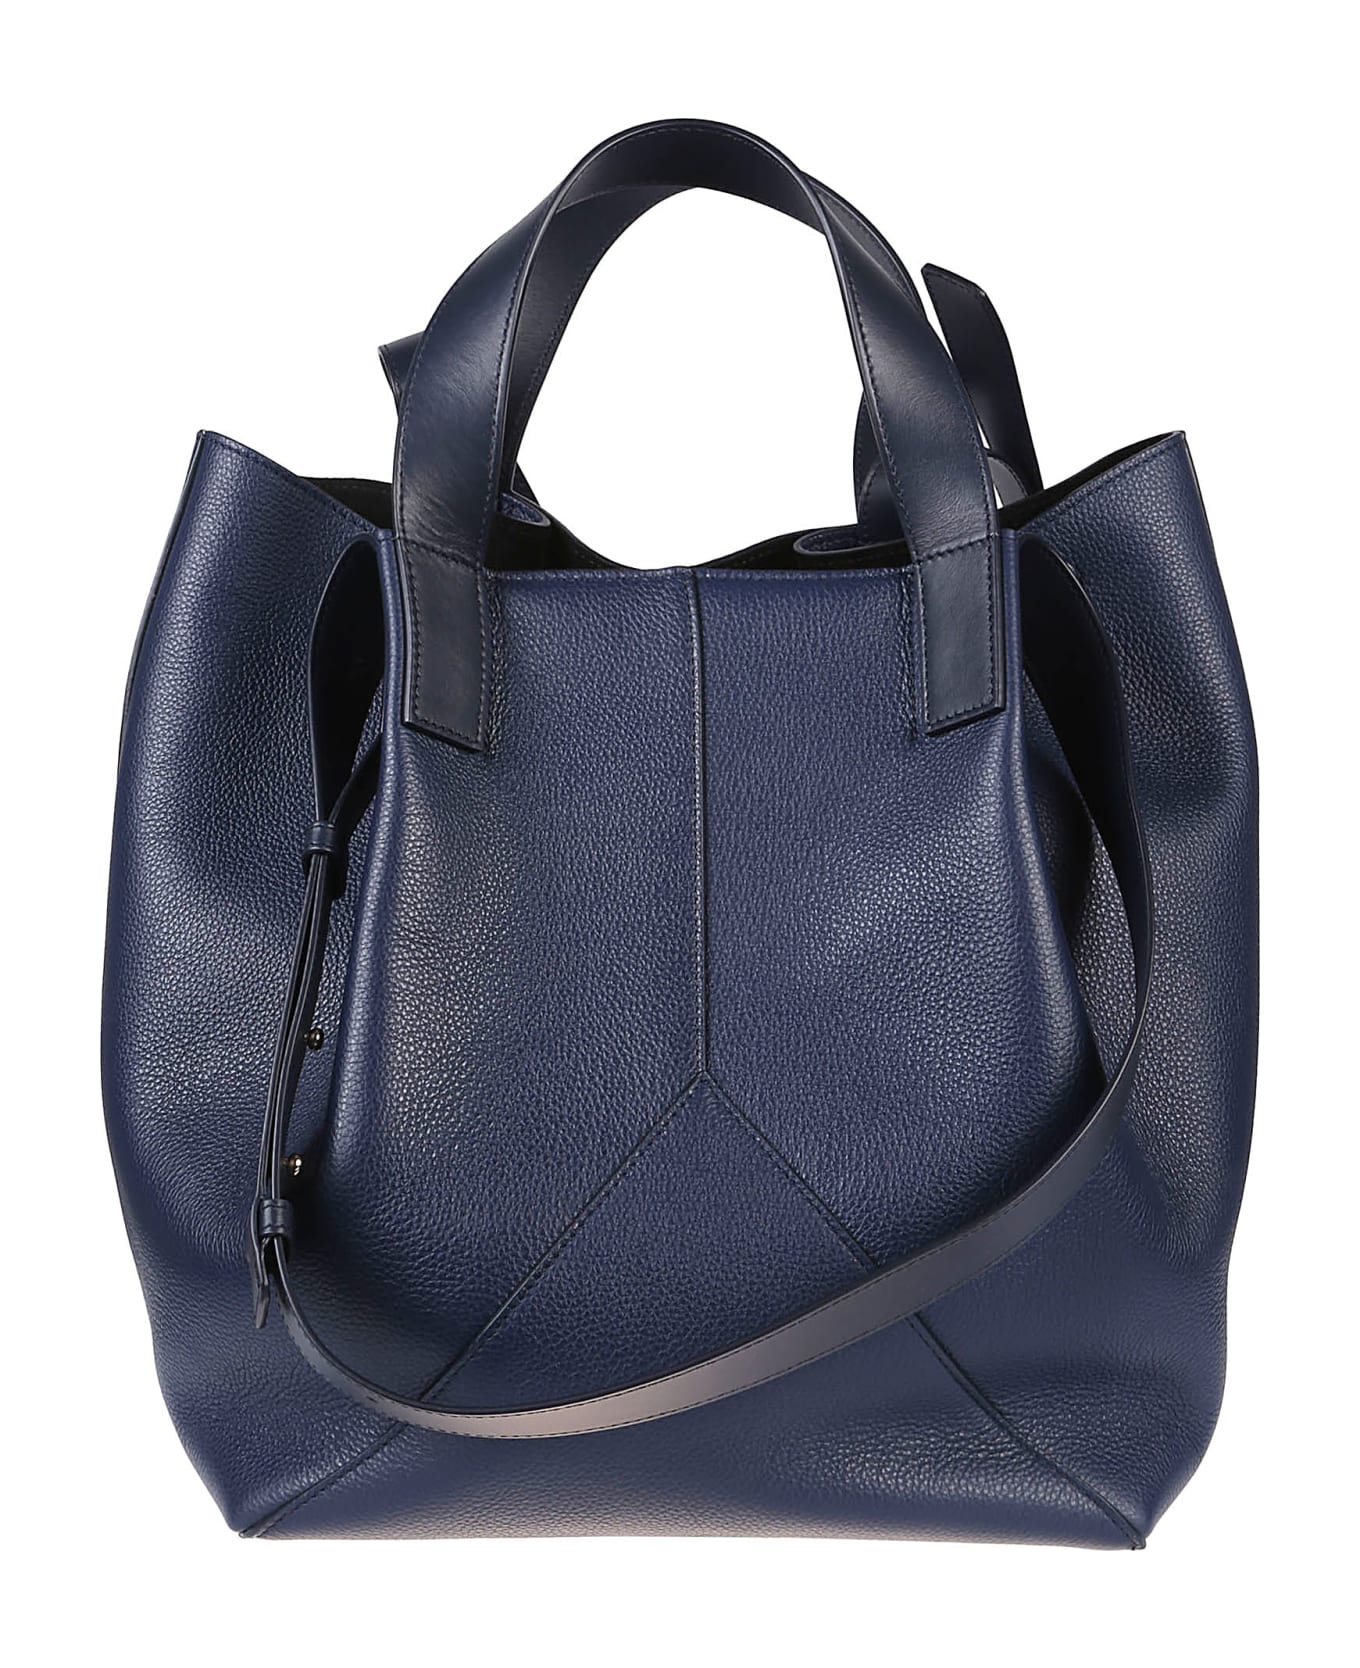 Victoria Beckham Medium Jumbo Shopping Bag - Midnight Blue